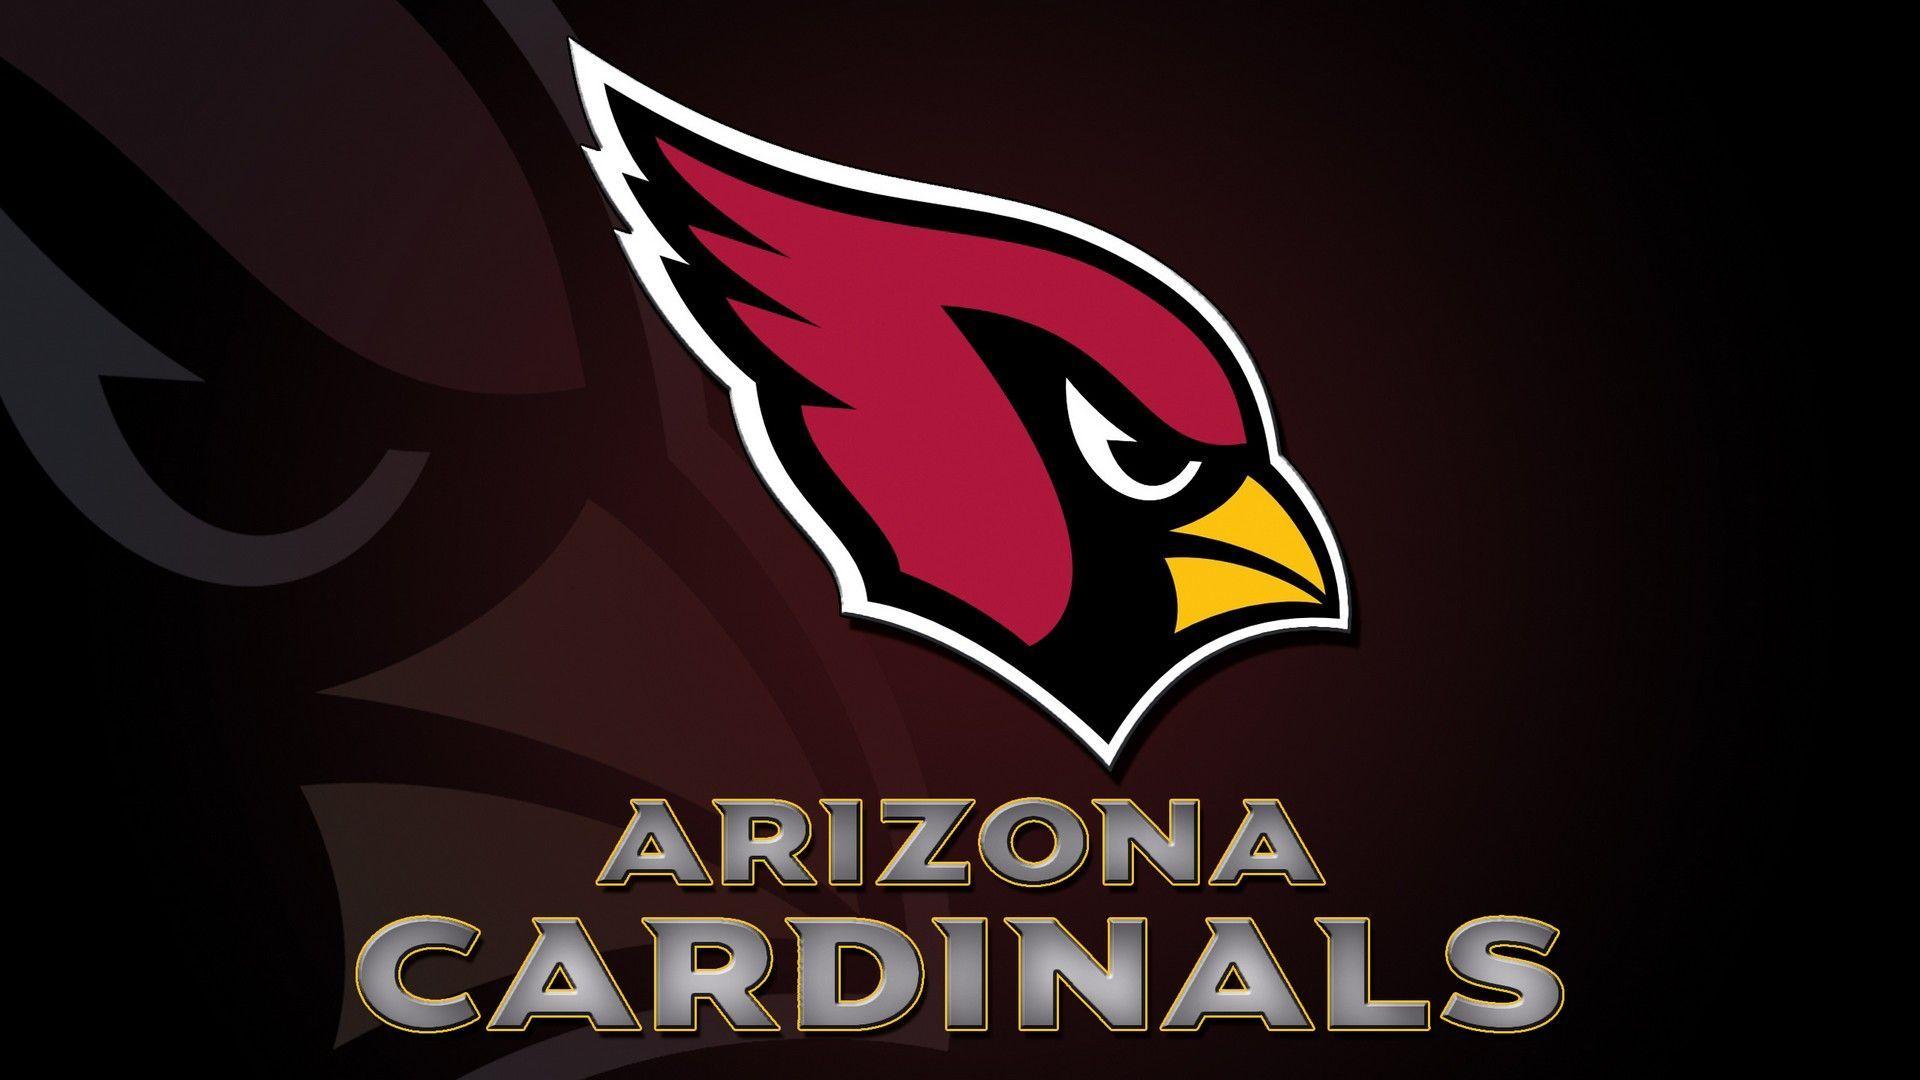 Arizona Cardinals Wallpaper HD. Wallpaper. Arizona cardinals